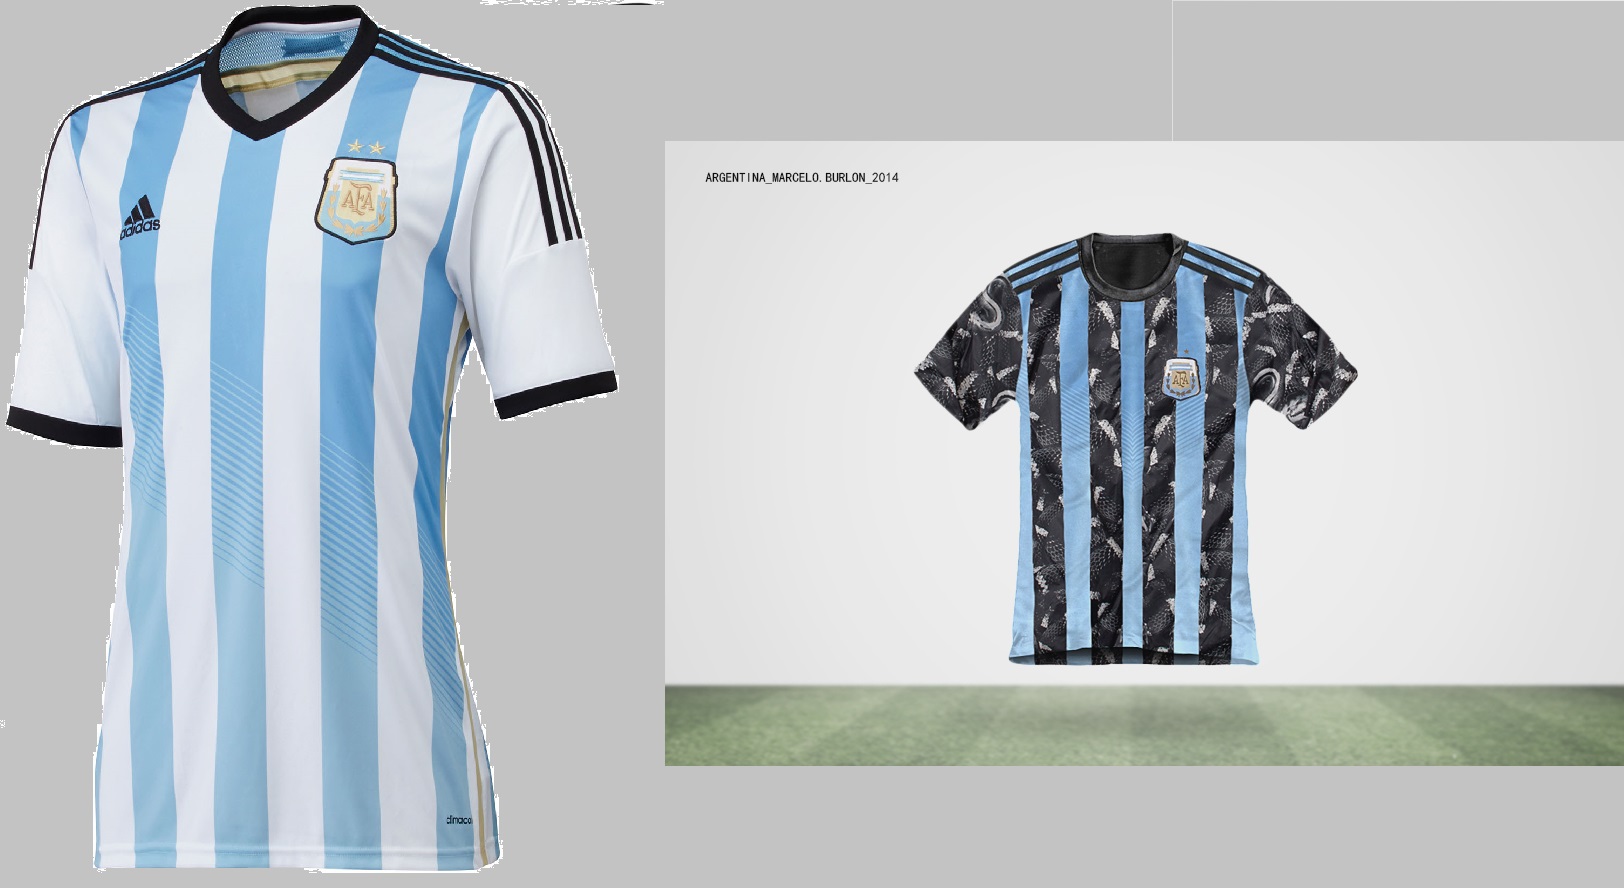 Argentina distributor jersey